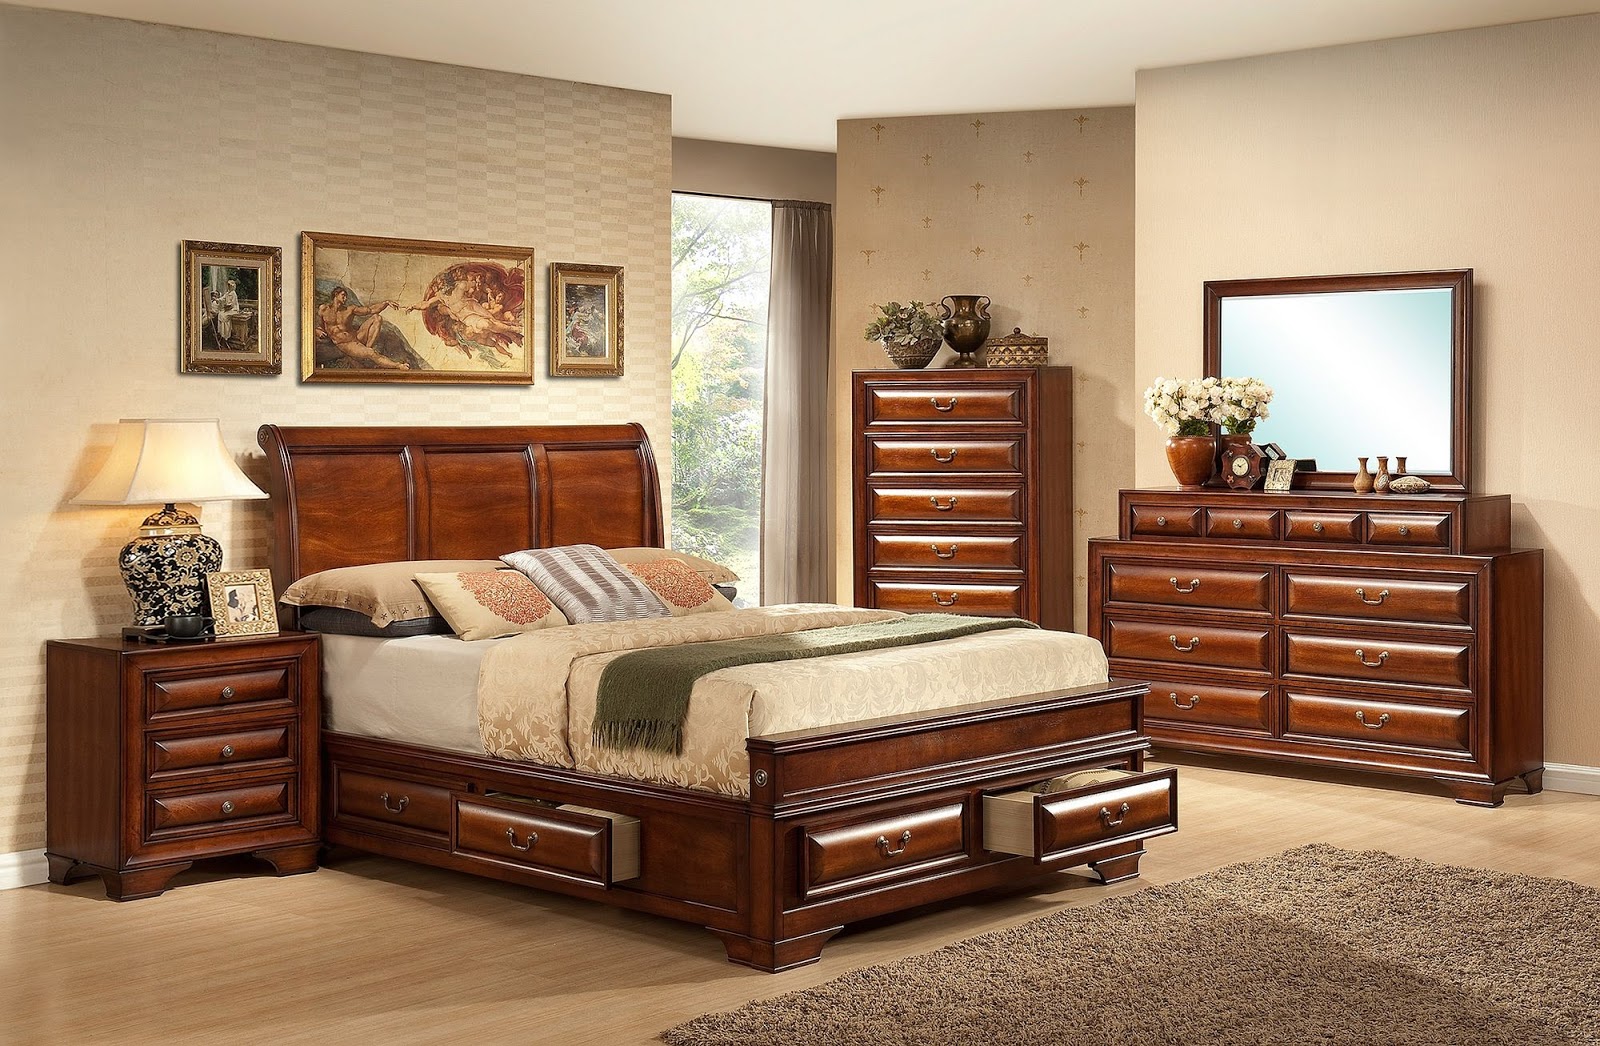 new bedroom furniture image